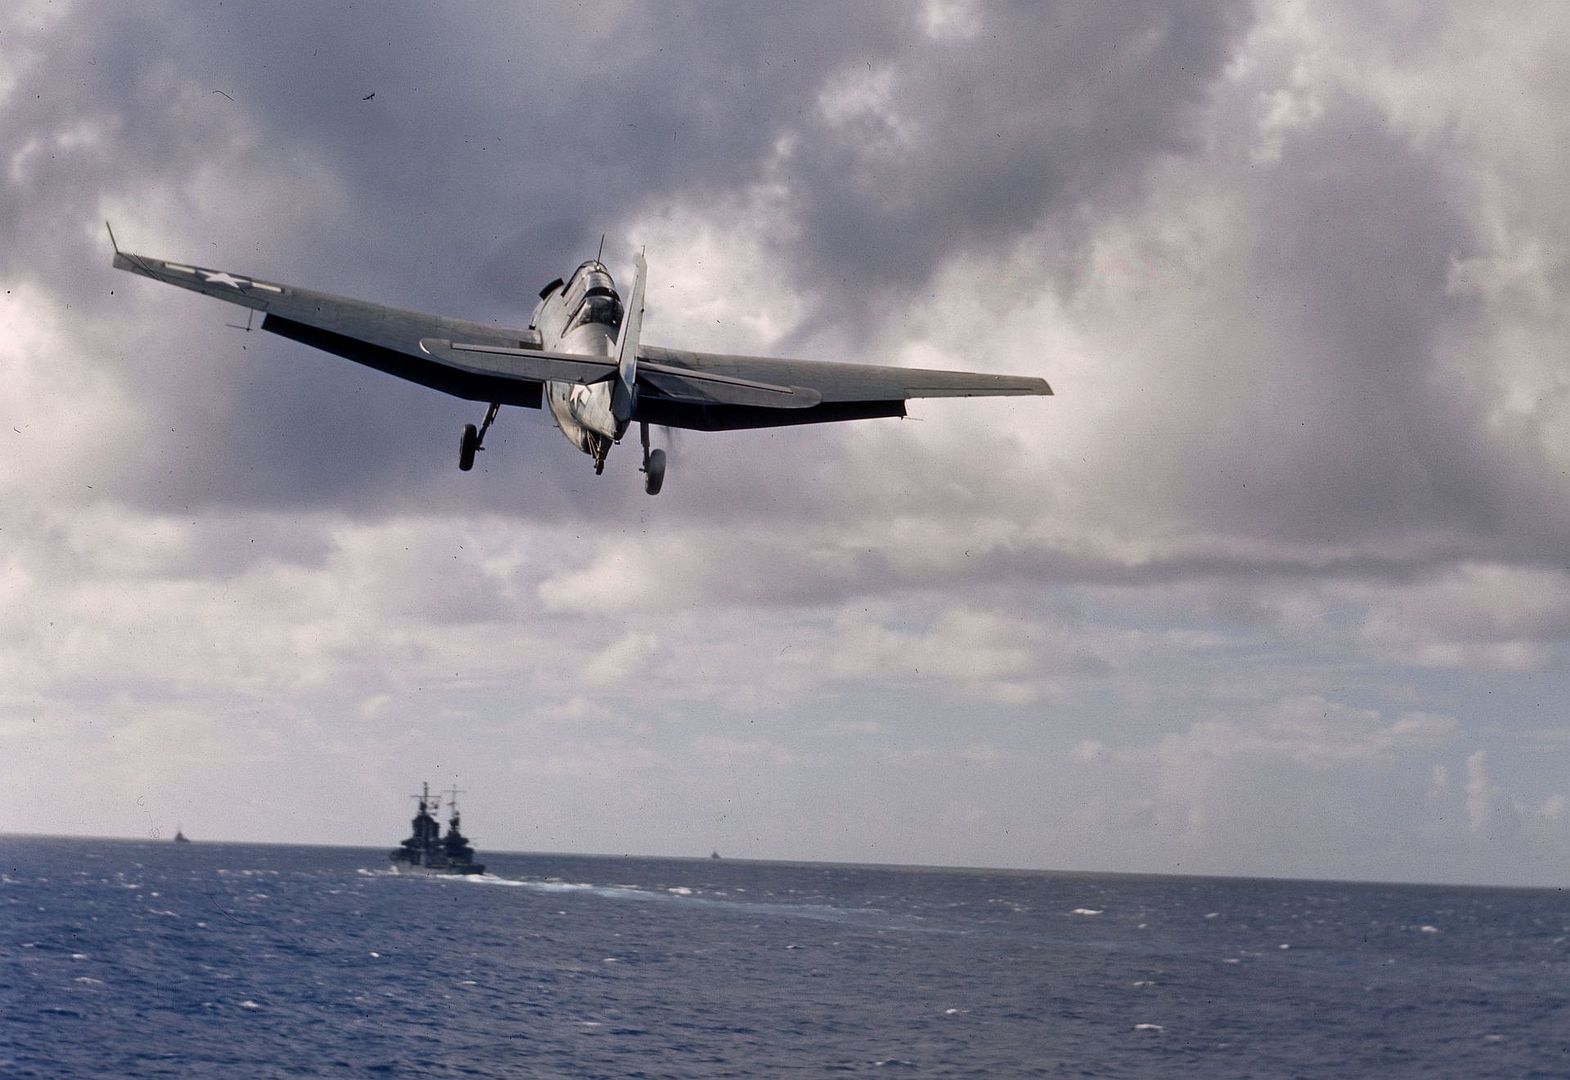 TBF Takes Off From Flight Deck Of USS Yorktown